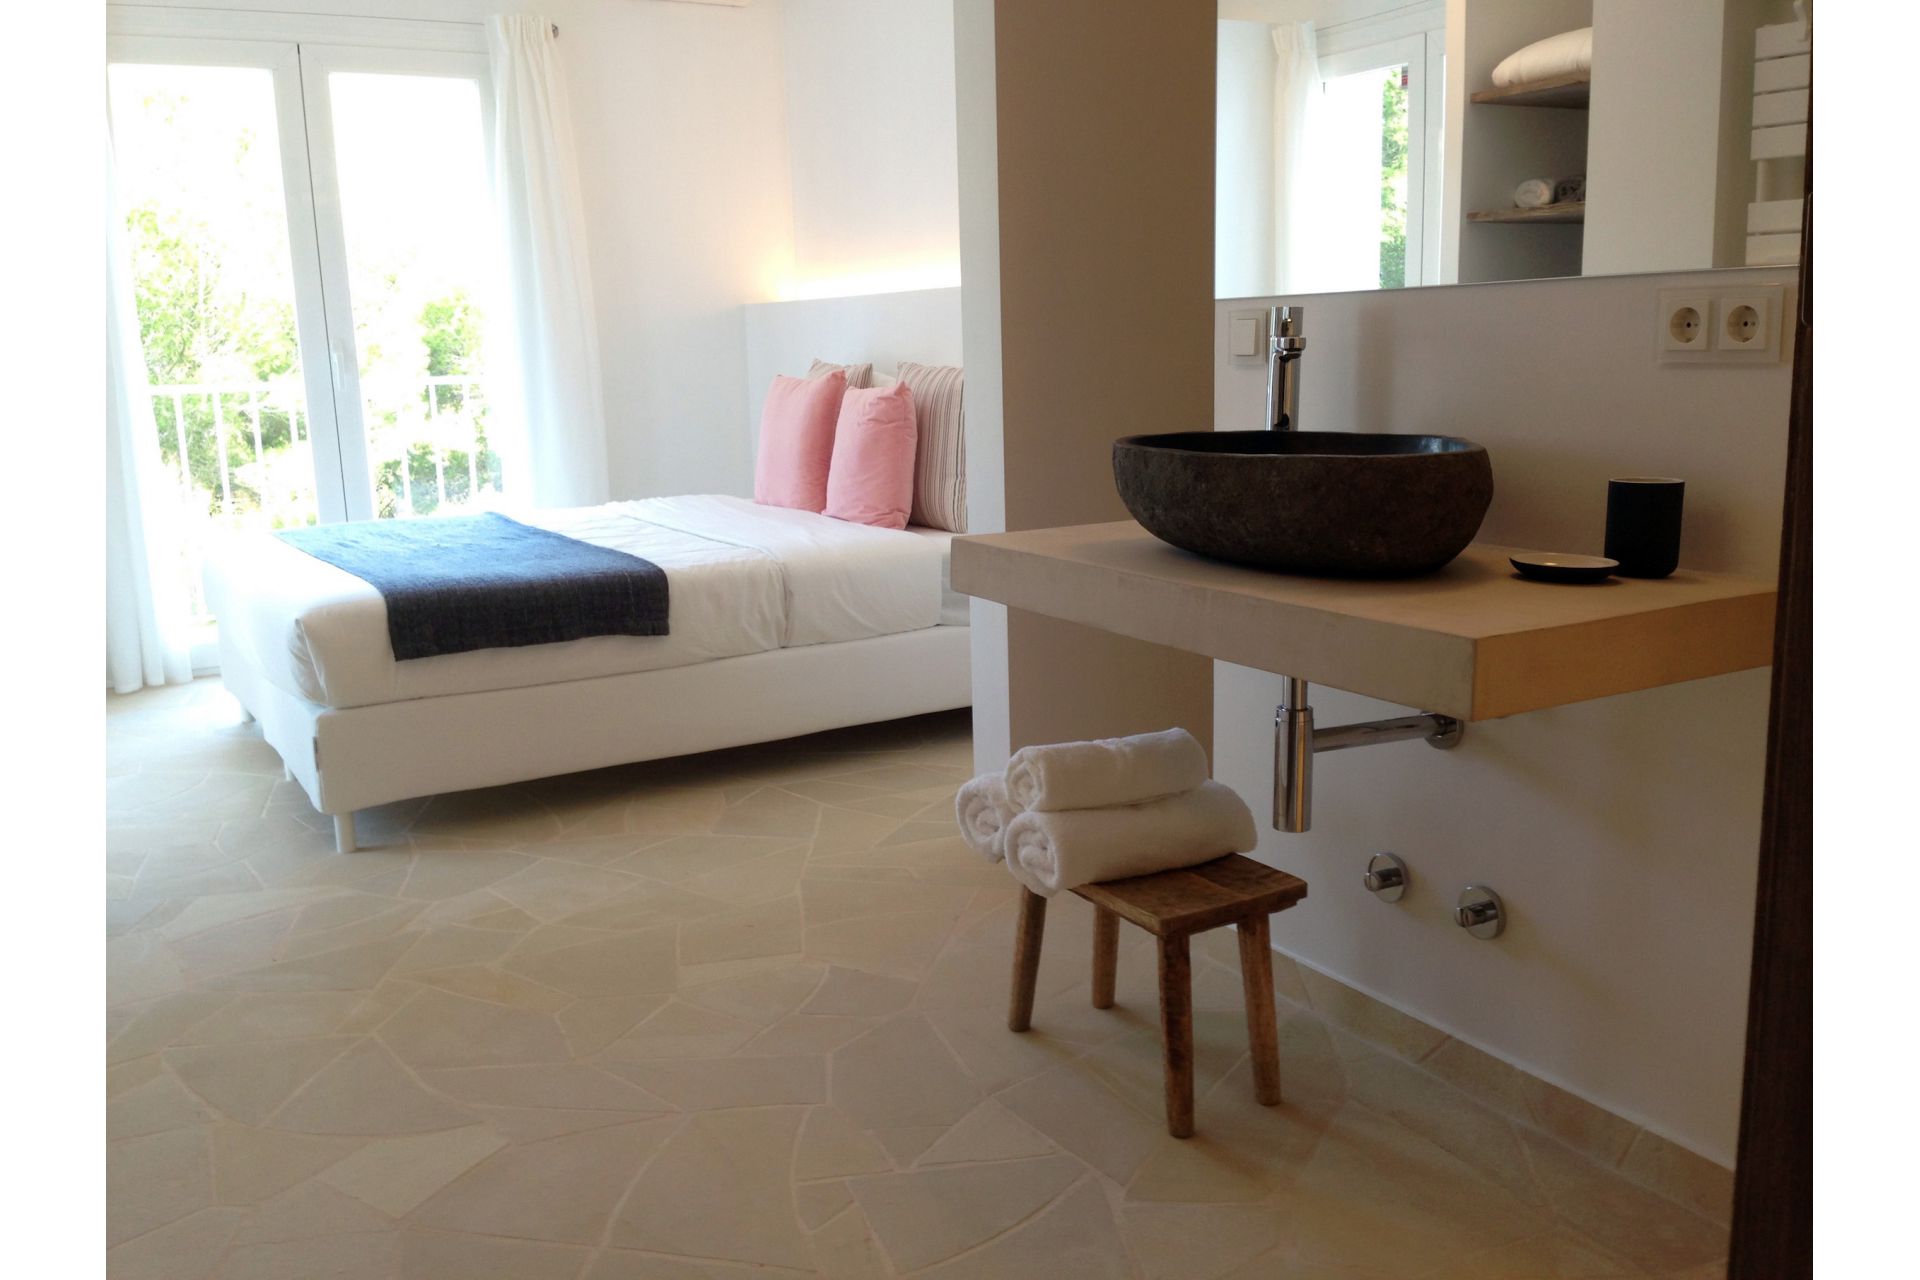 Méditerranée Location Villa avec Piscine privée à St Josep de sa Talaia, Ibiza